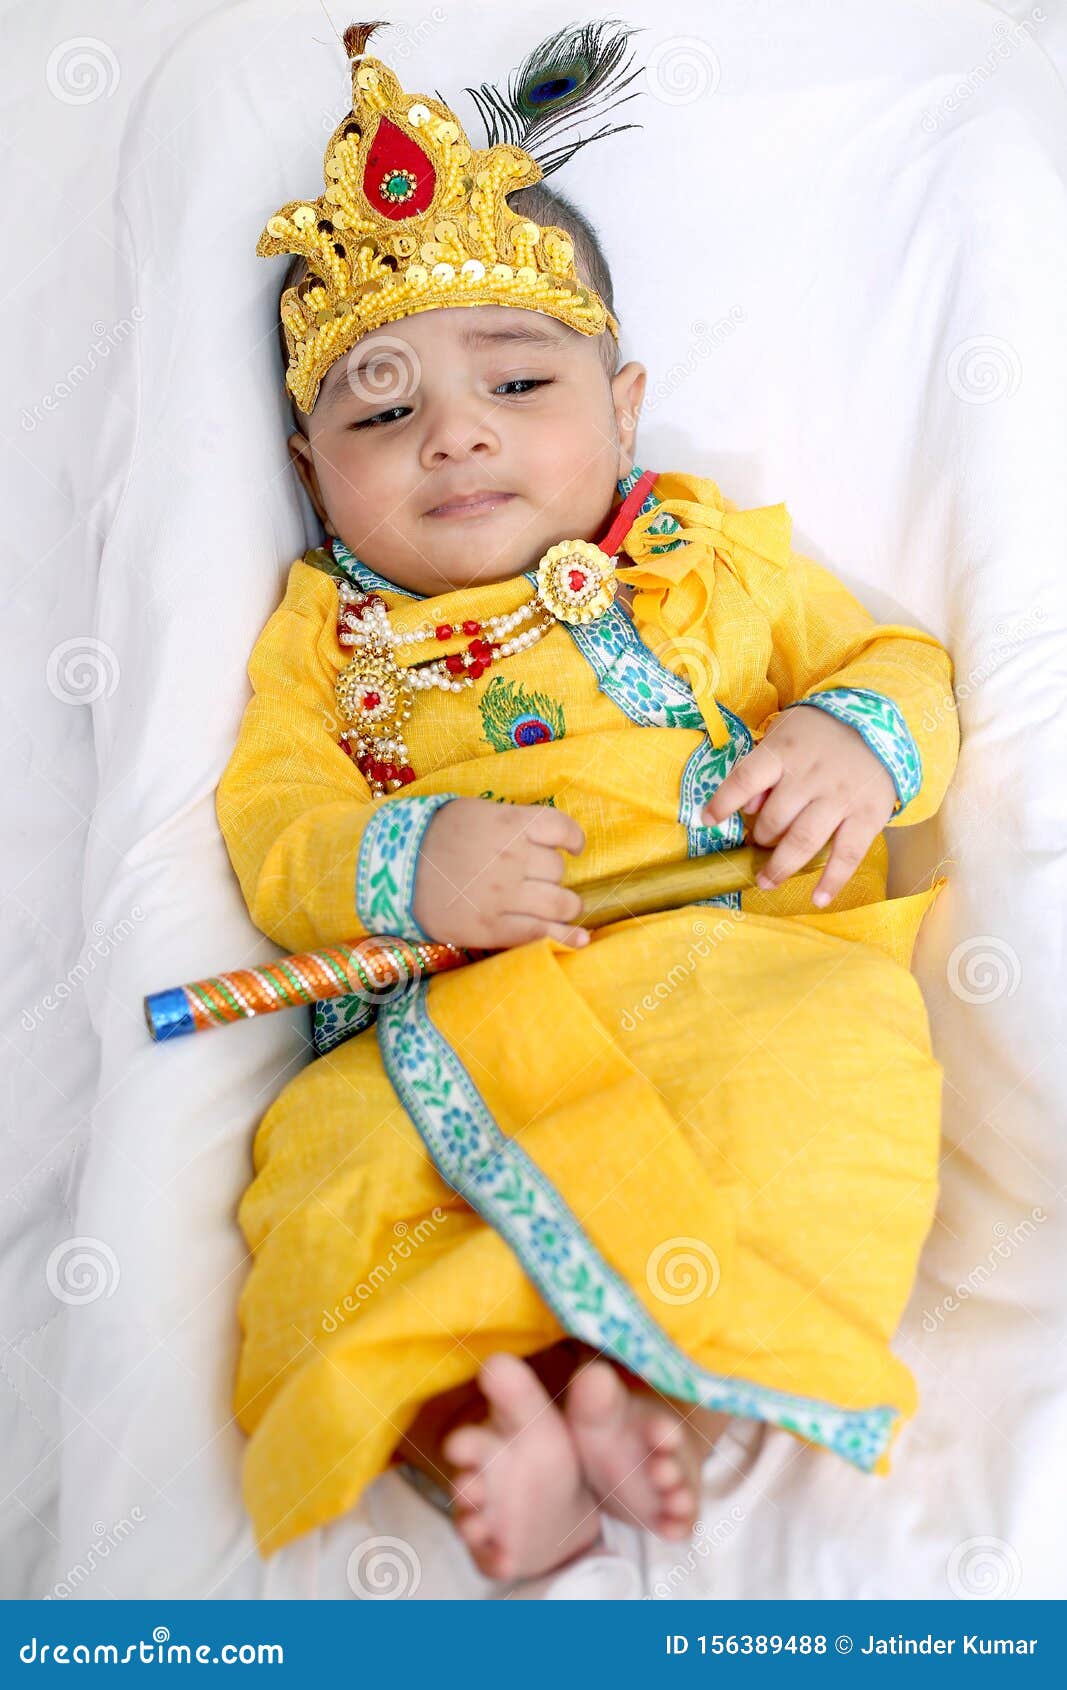 Picture of Baby krishna. stock photo. Image of bhagavan - 156389488